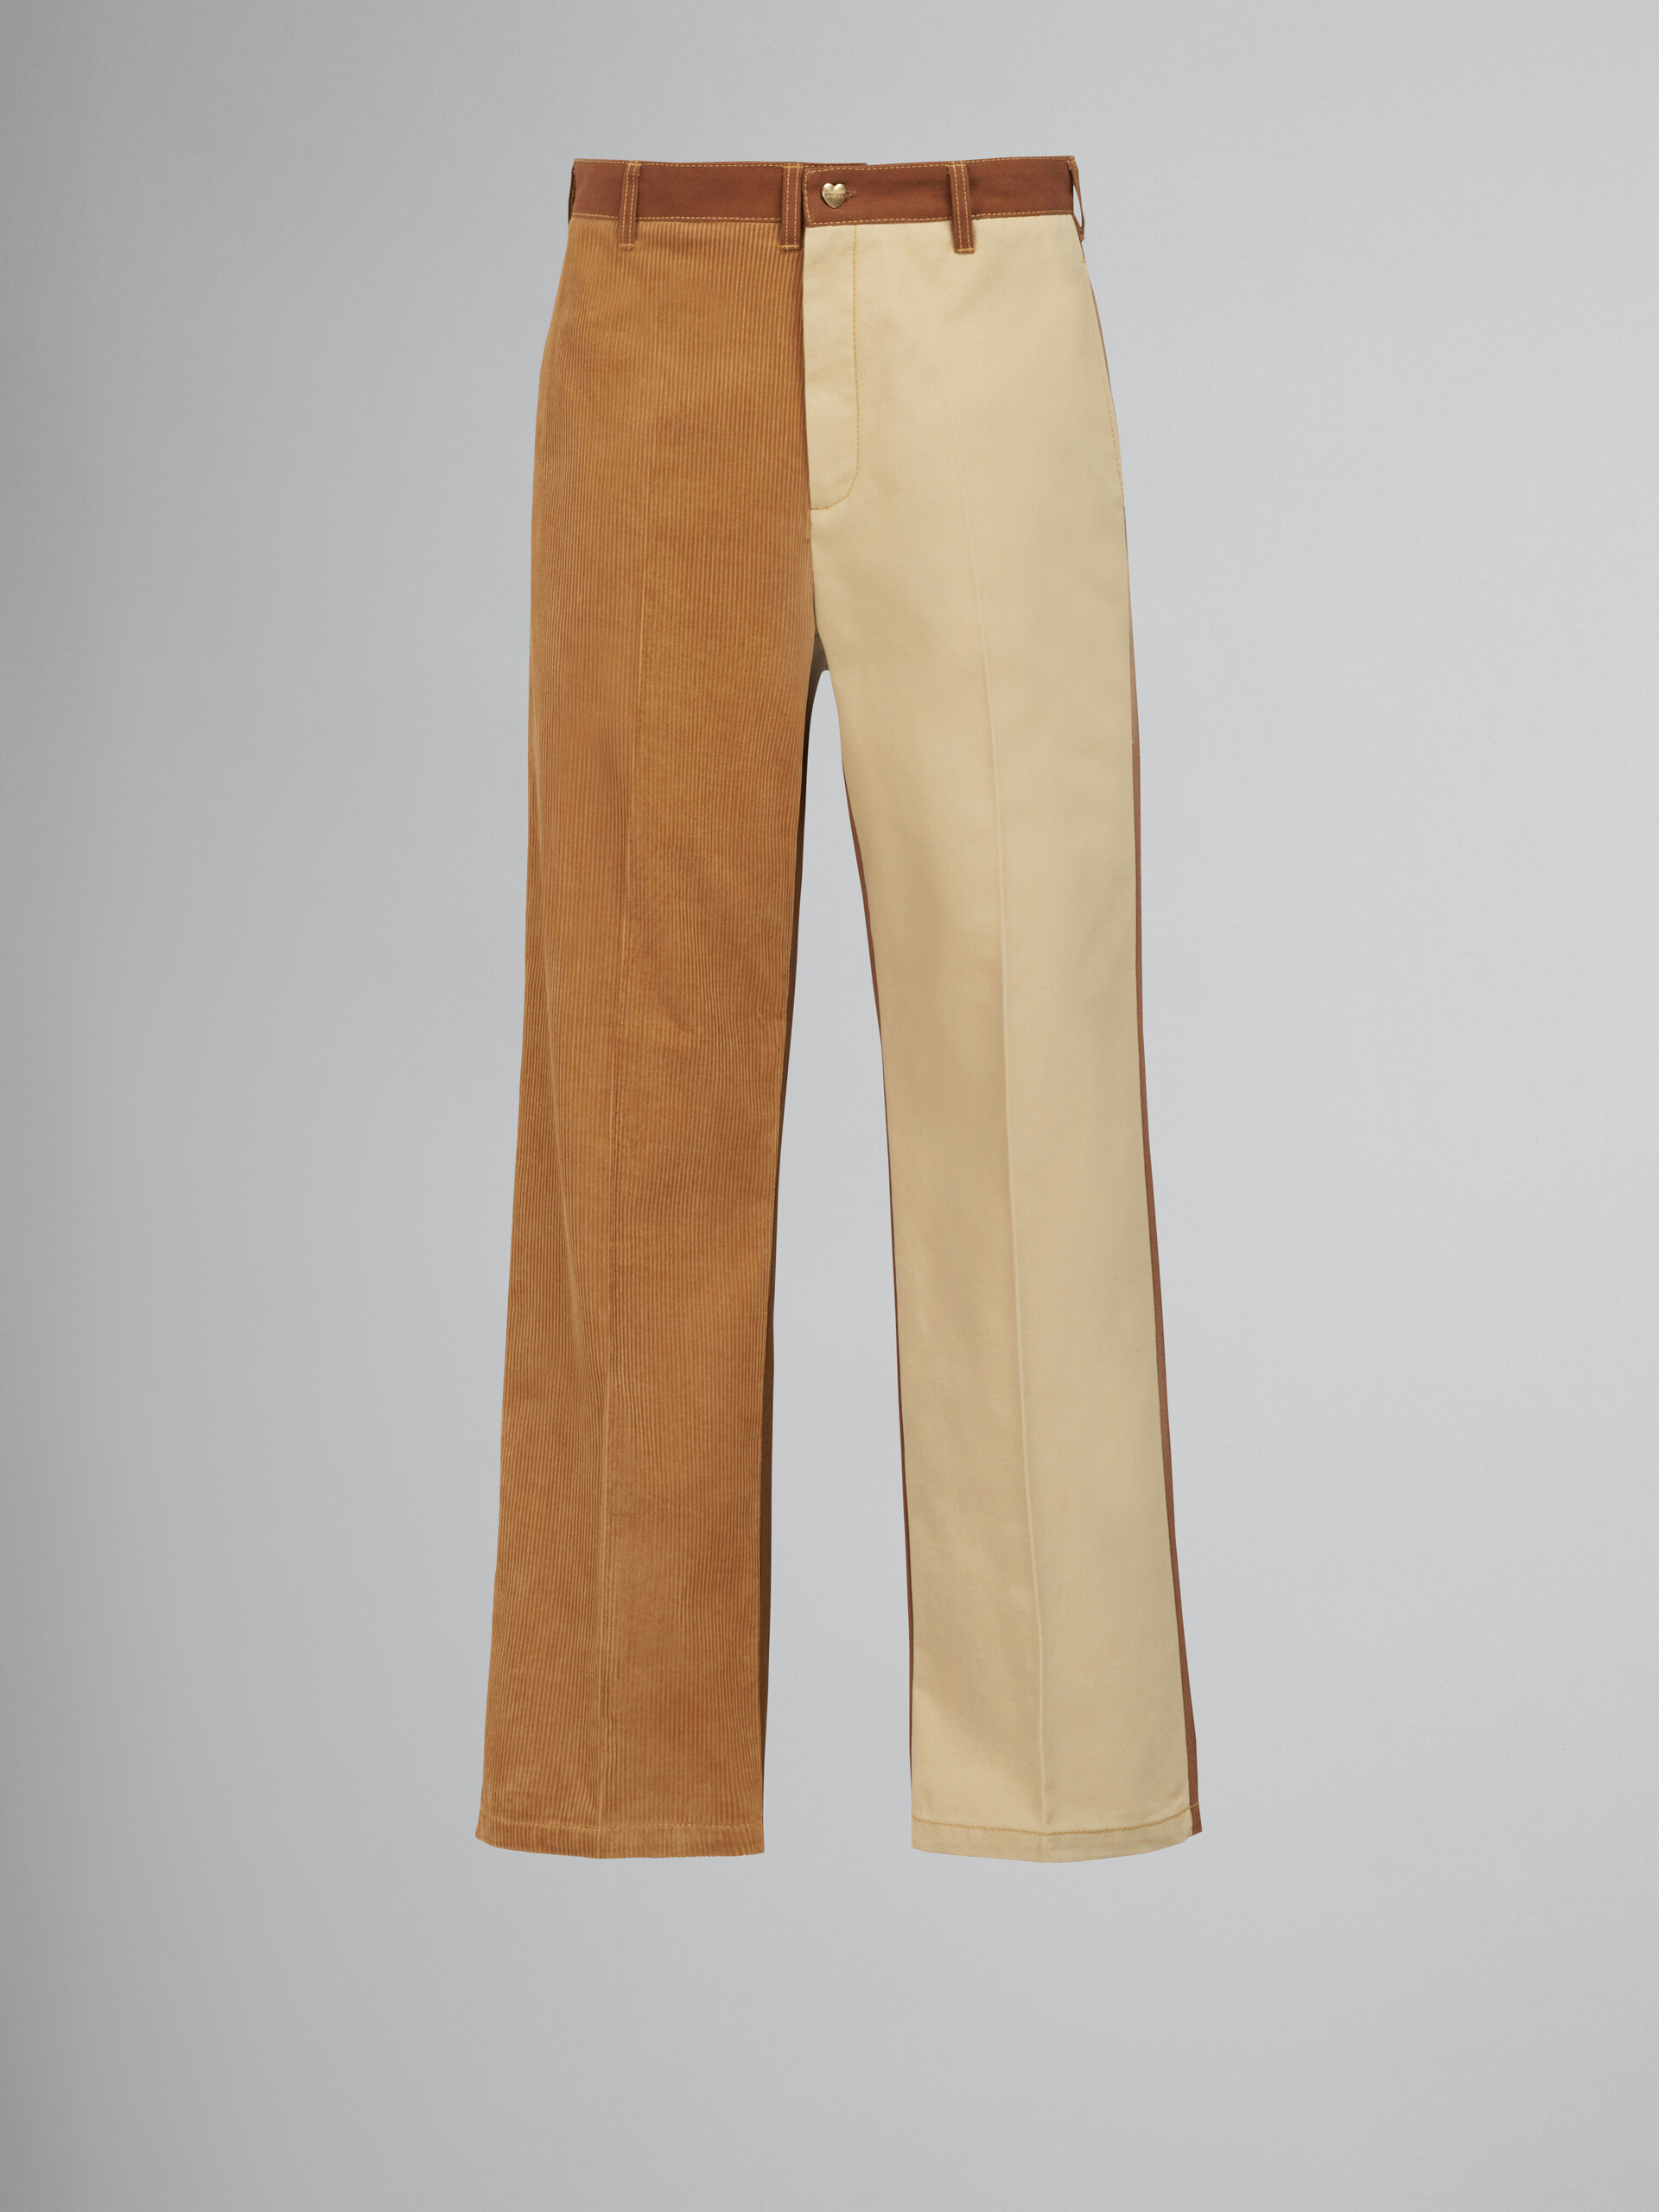 MARNI x CARHARTT WIP - brown colour-block trousers - Pants - Image 1